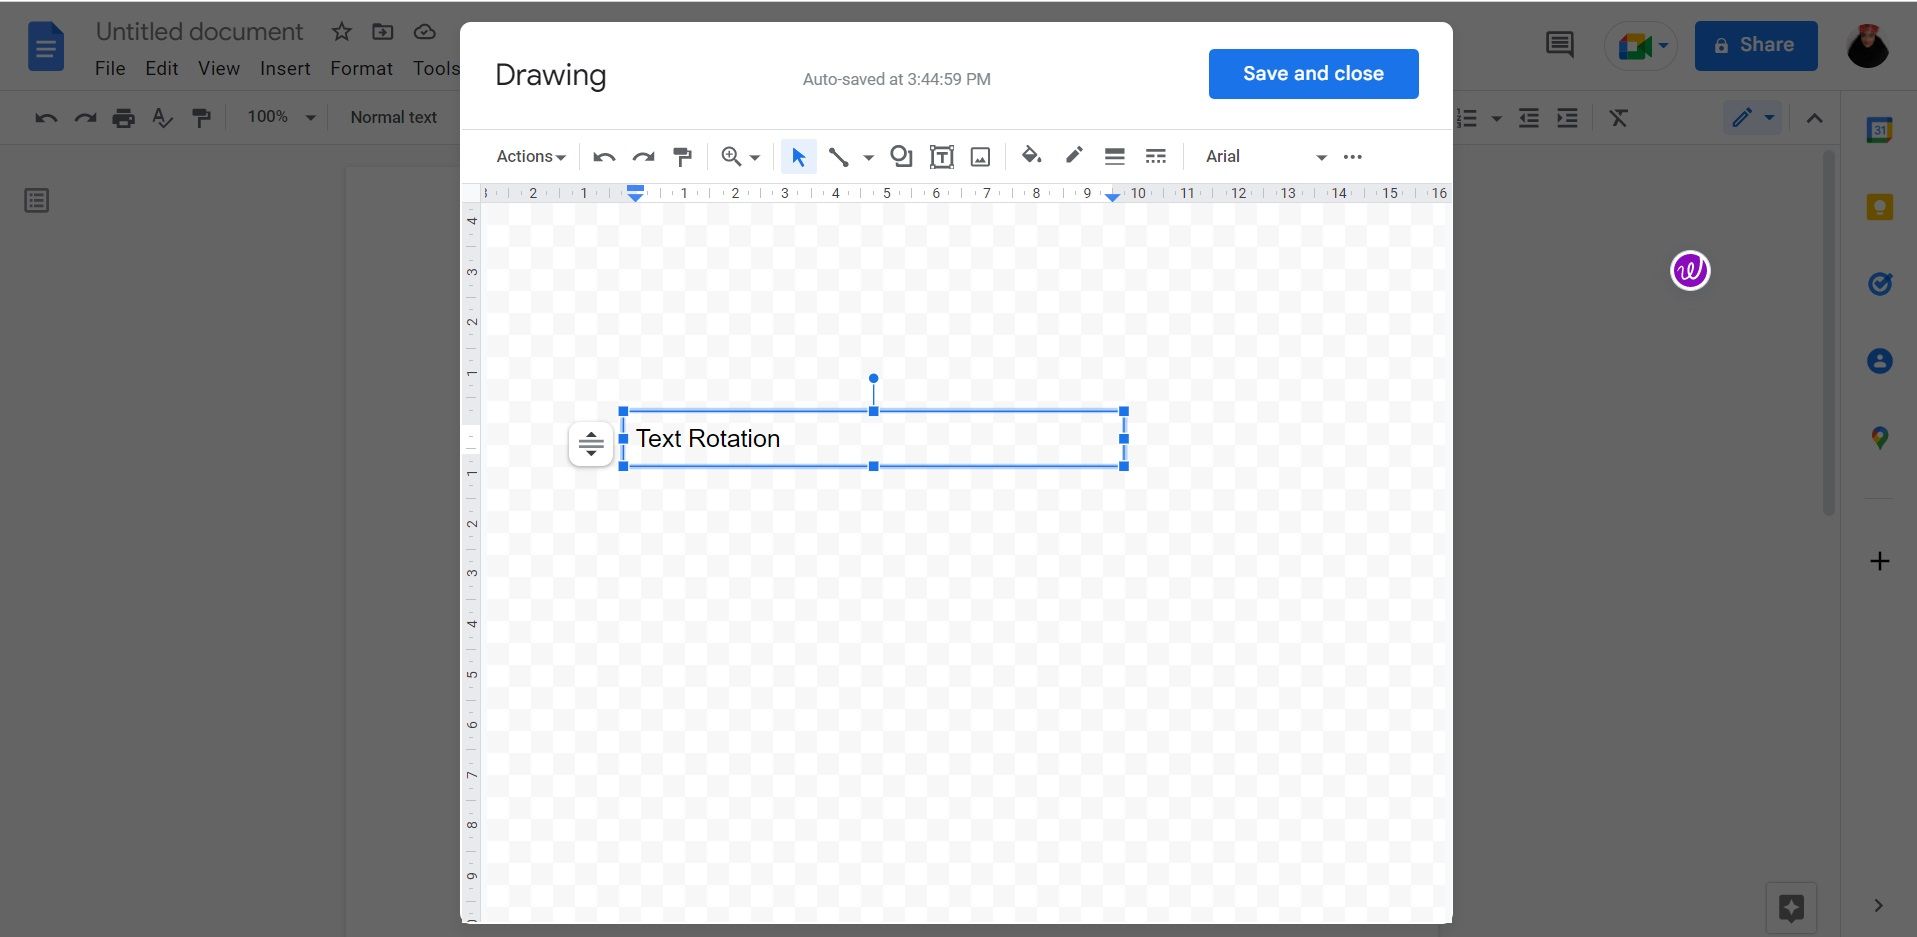 Drawing window in Google Docs